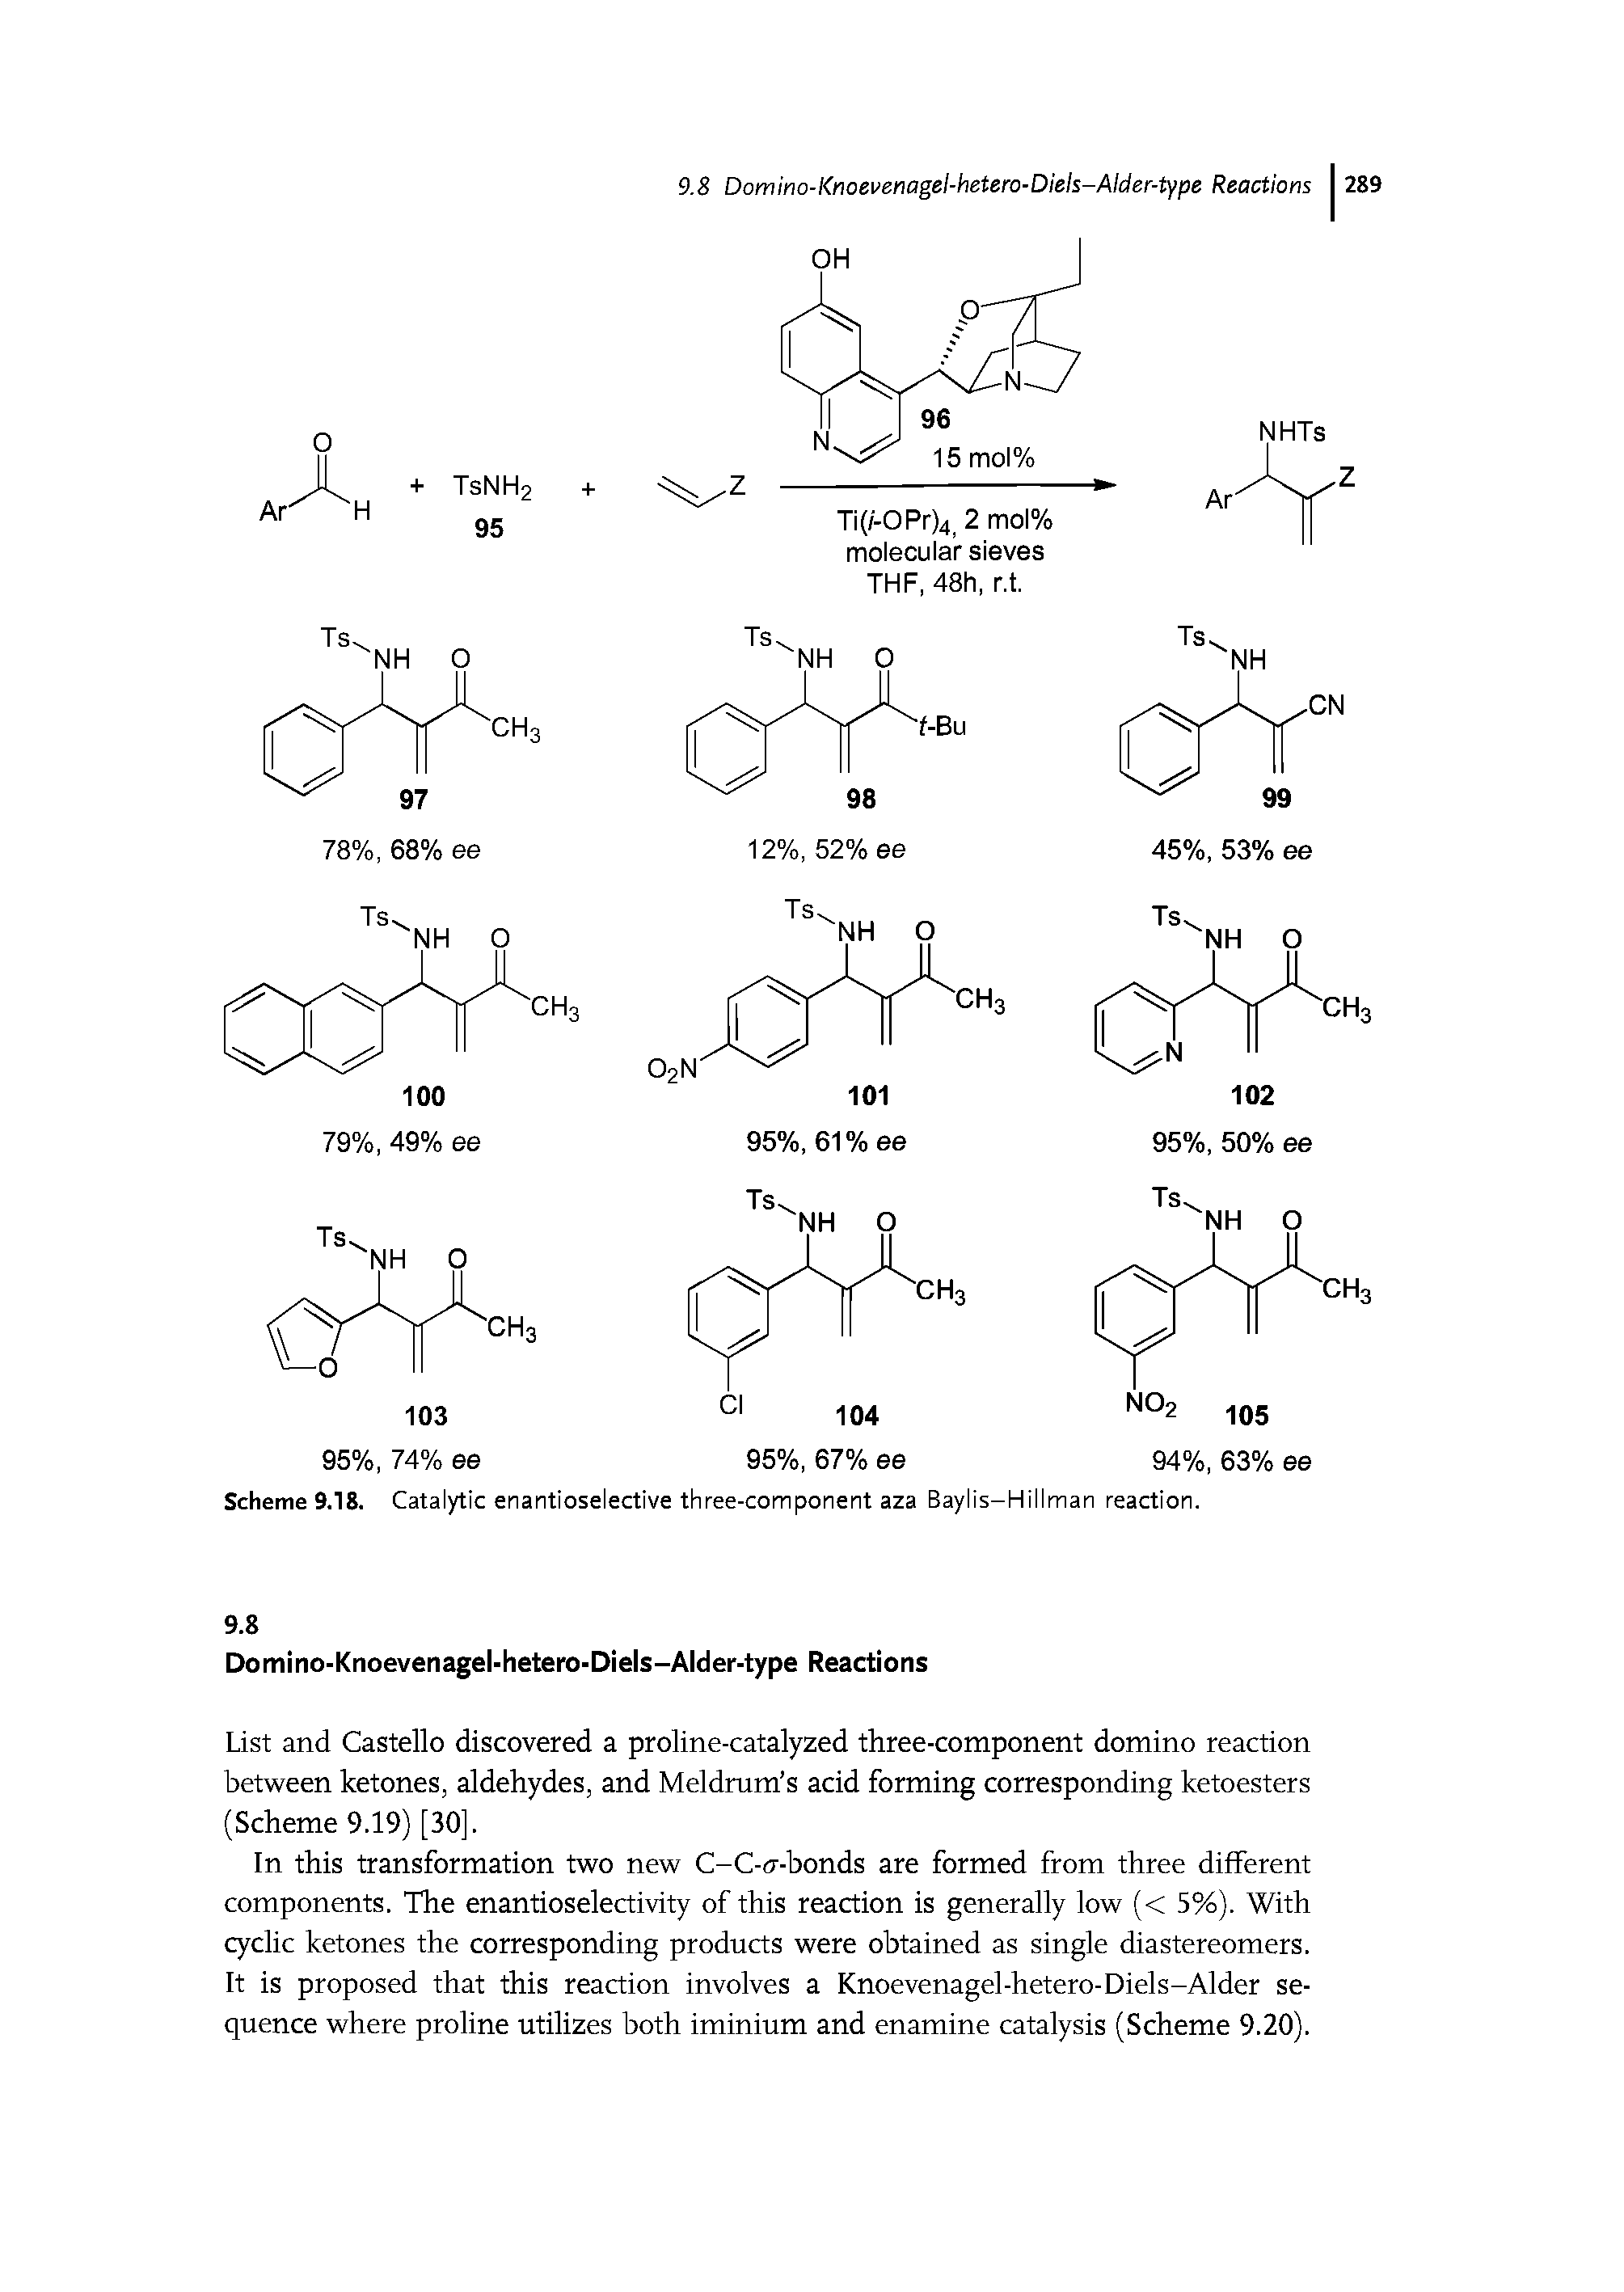 Scheme 9.18. Catalytic enantioselective three-component aza Baylis-Hillman reaction.